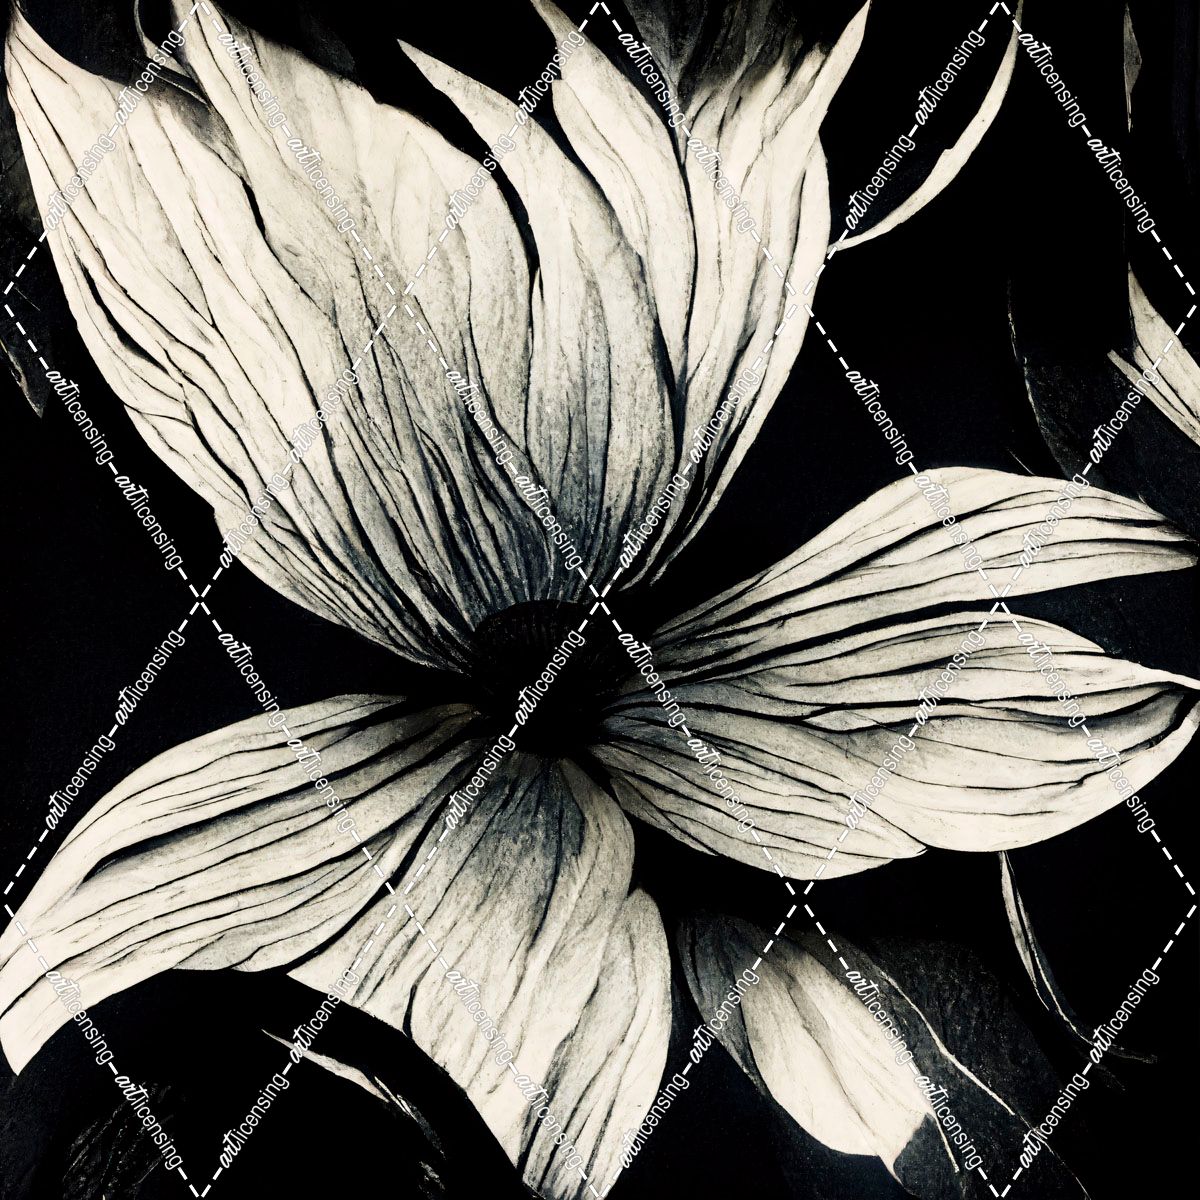 B010 Flowers Black White